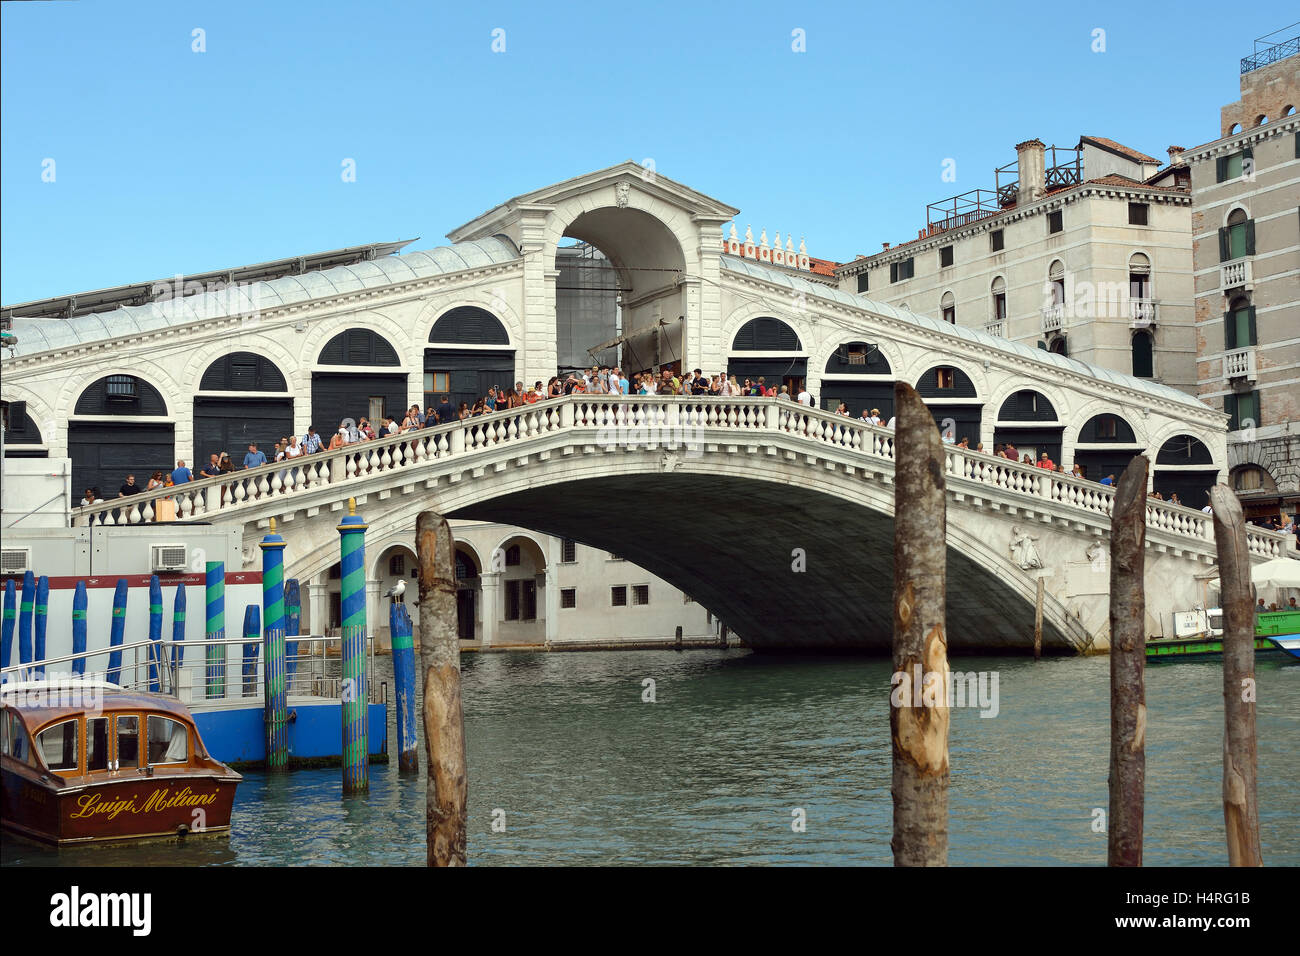 Rialto-Brücke an der Grand Canal Venedig in Italien. Stockfoto